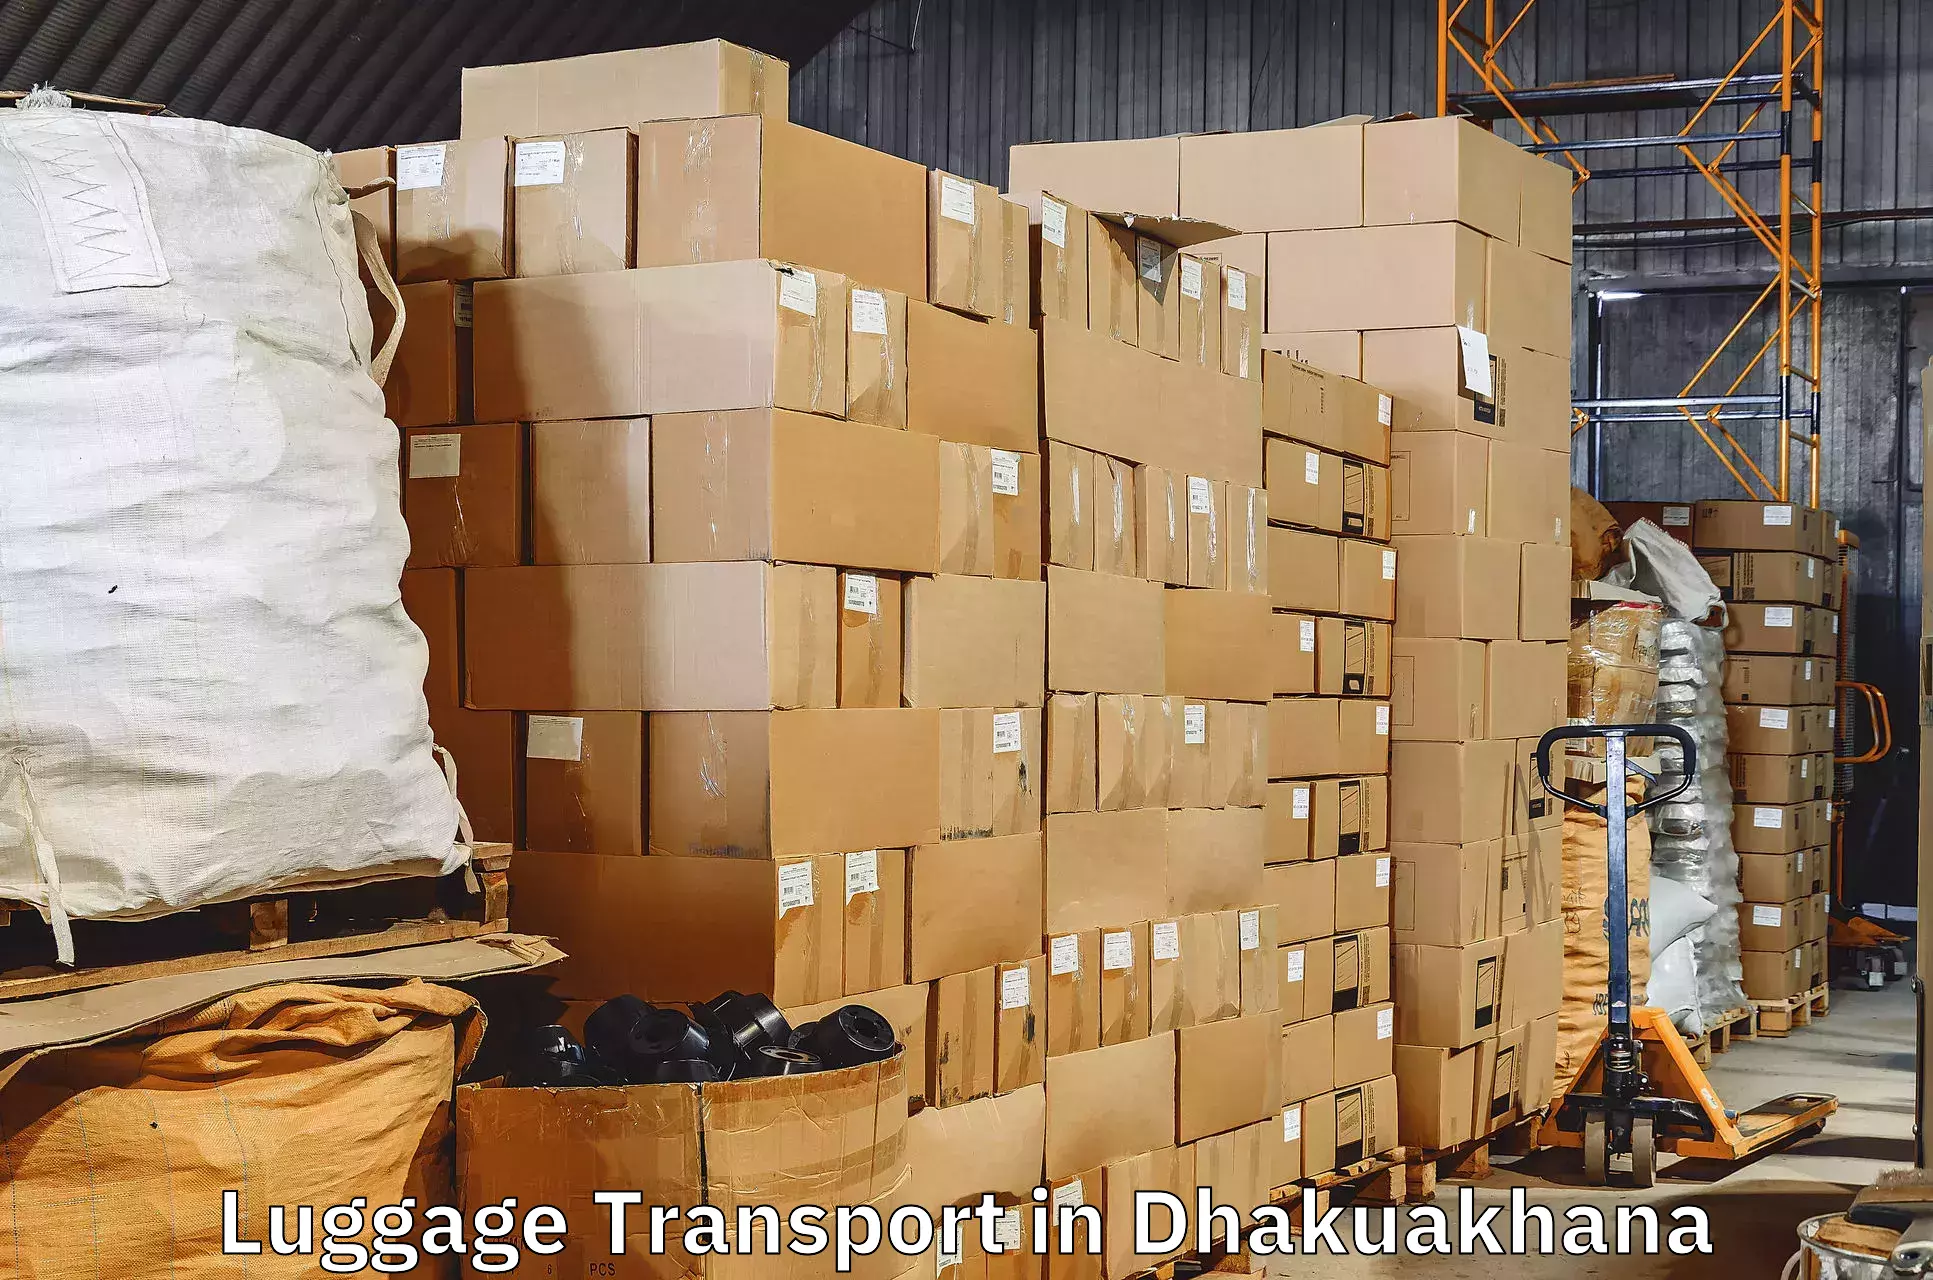 Luggage shipment tracking in Dhakuakhana